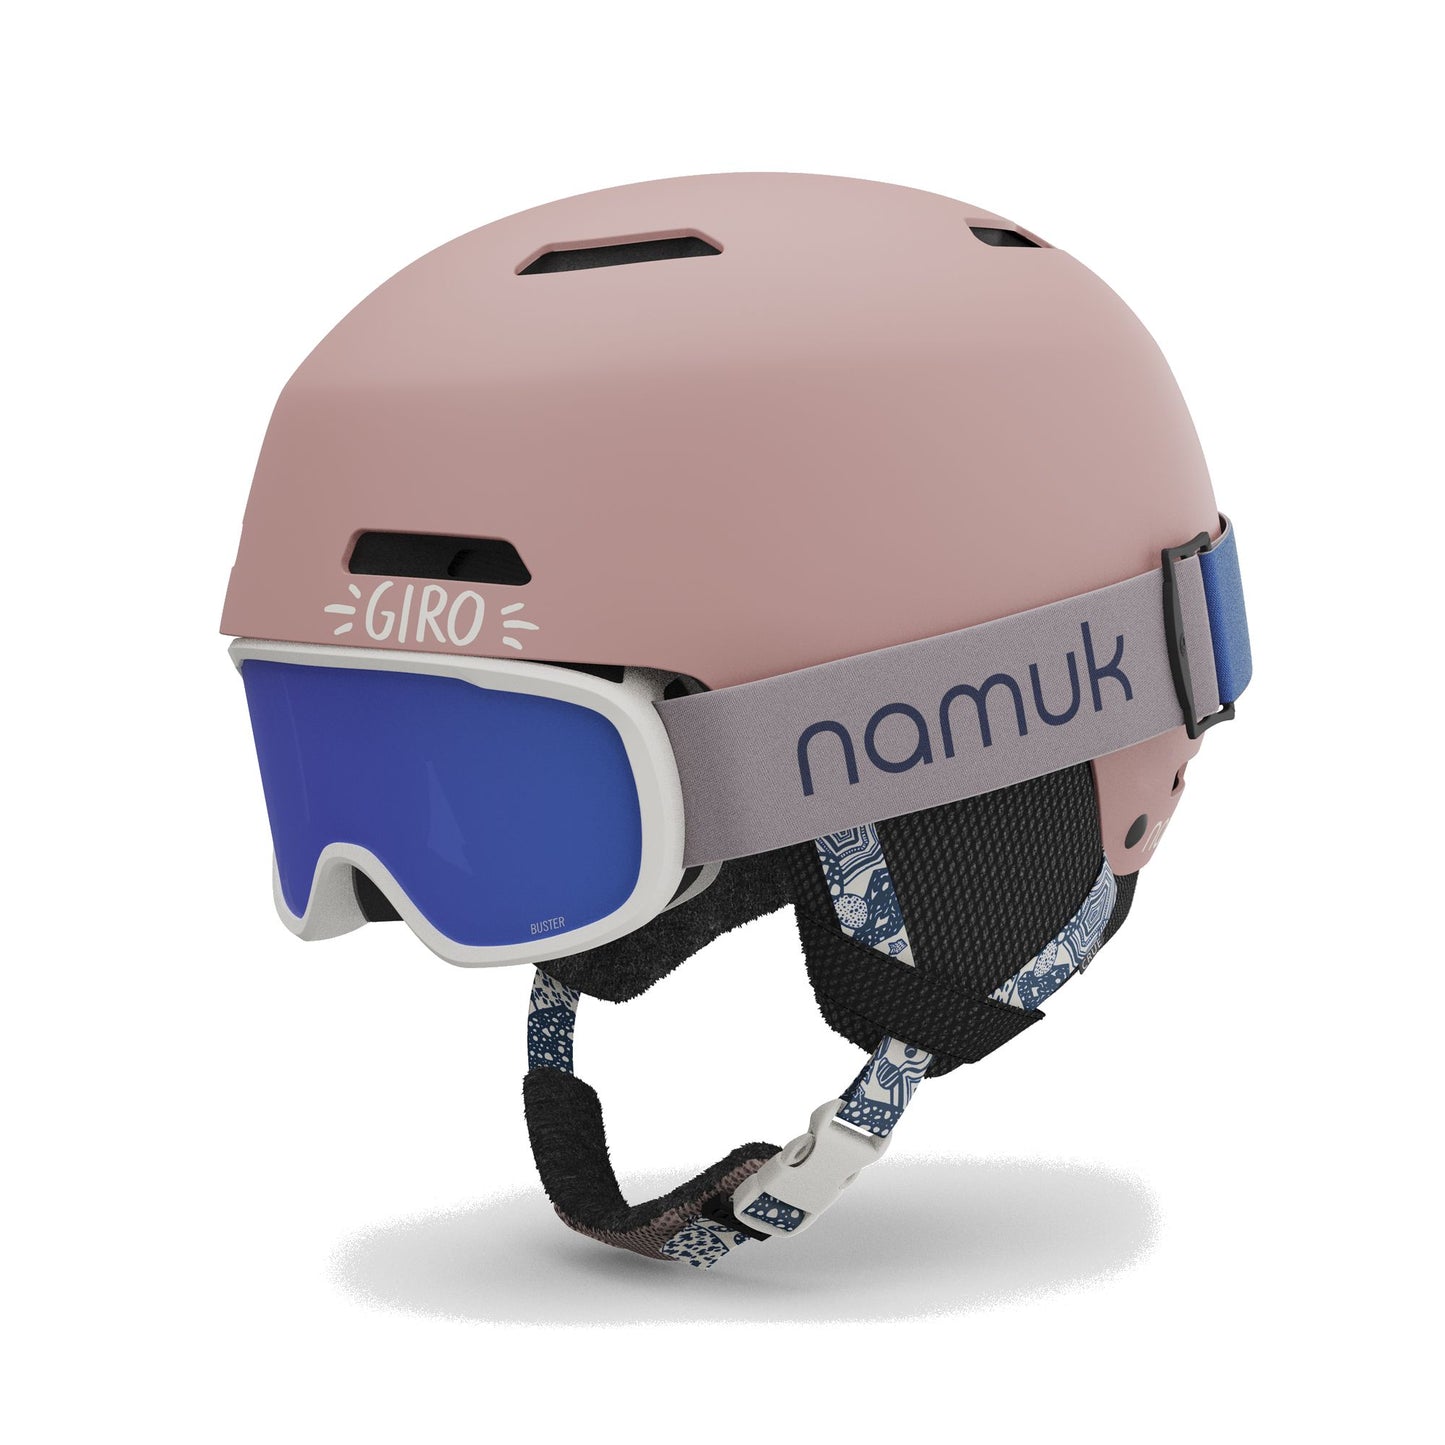 Giro Youth Crue CP Helmet Namuk Dark Rose Snow Helmets